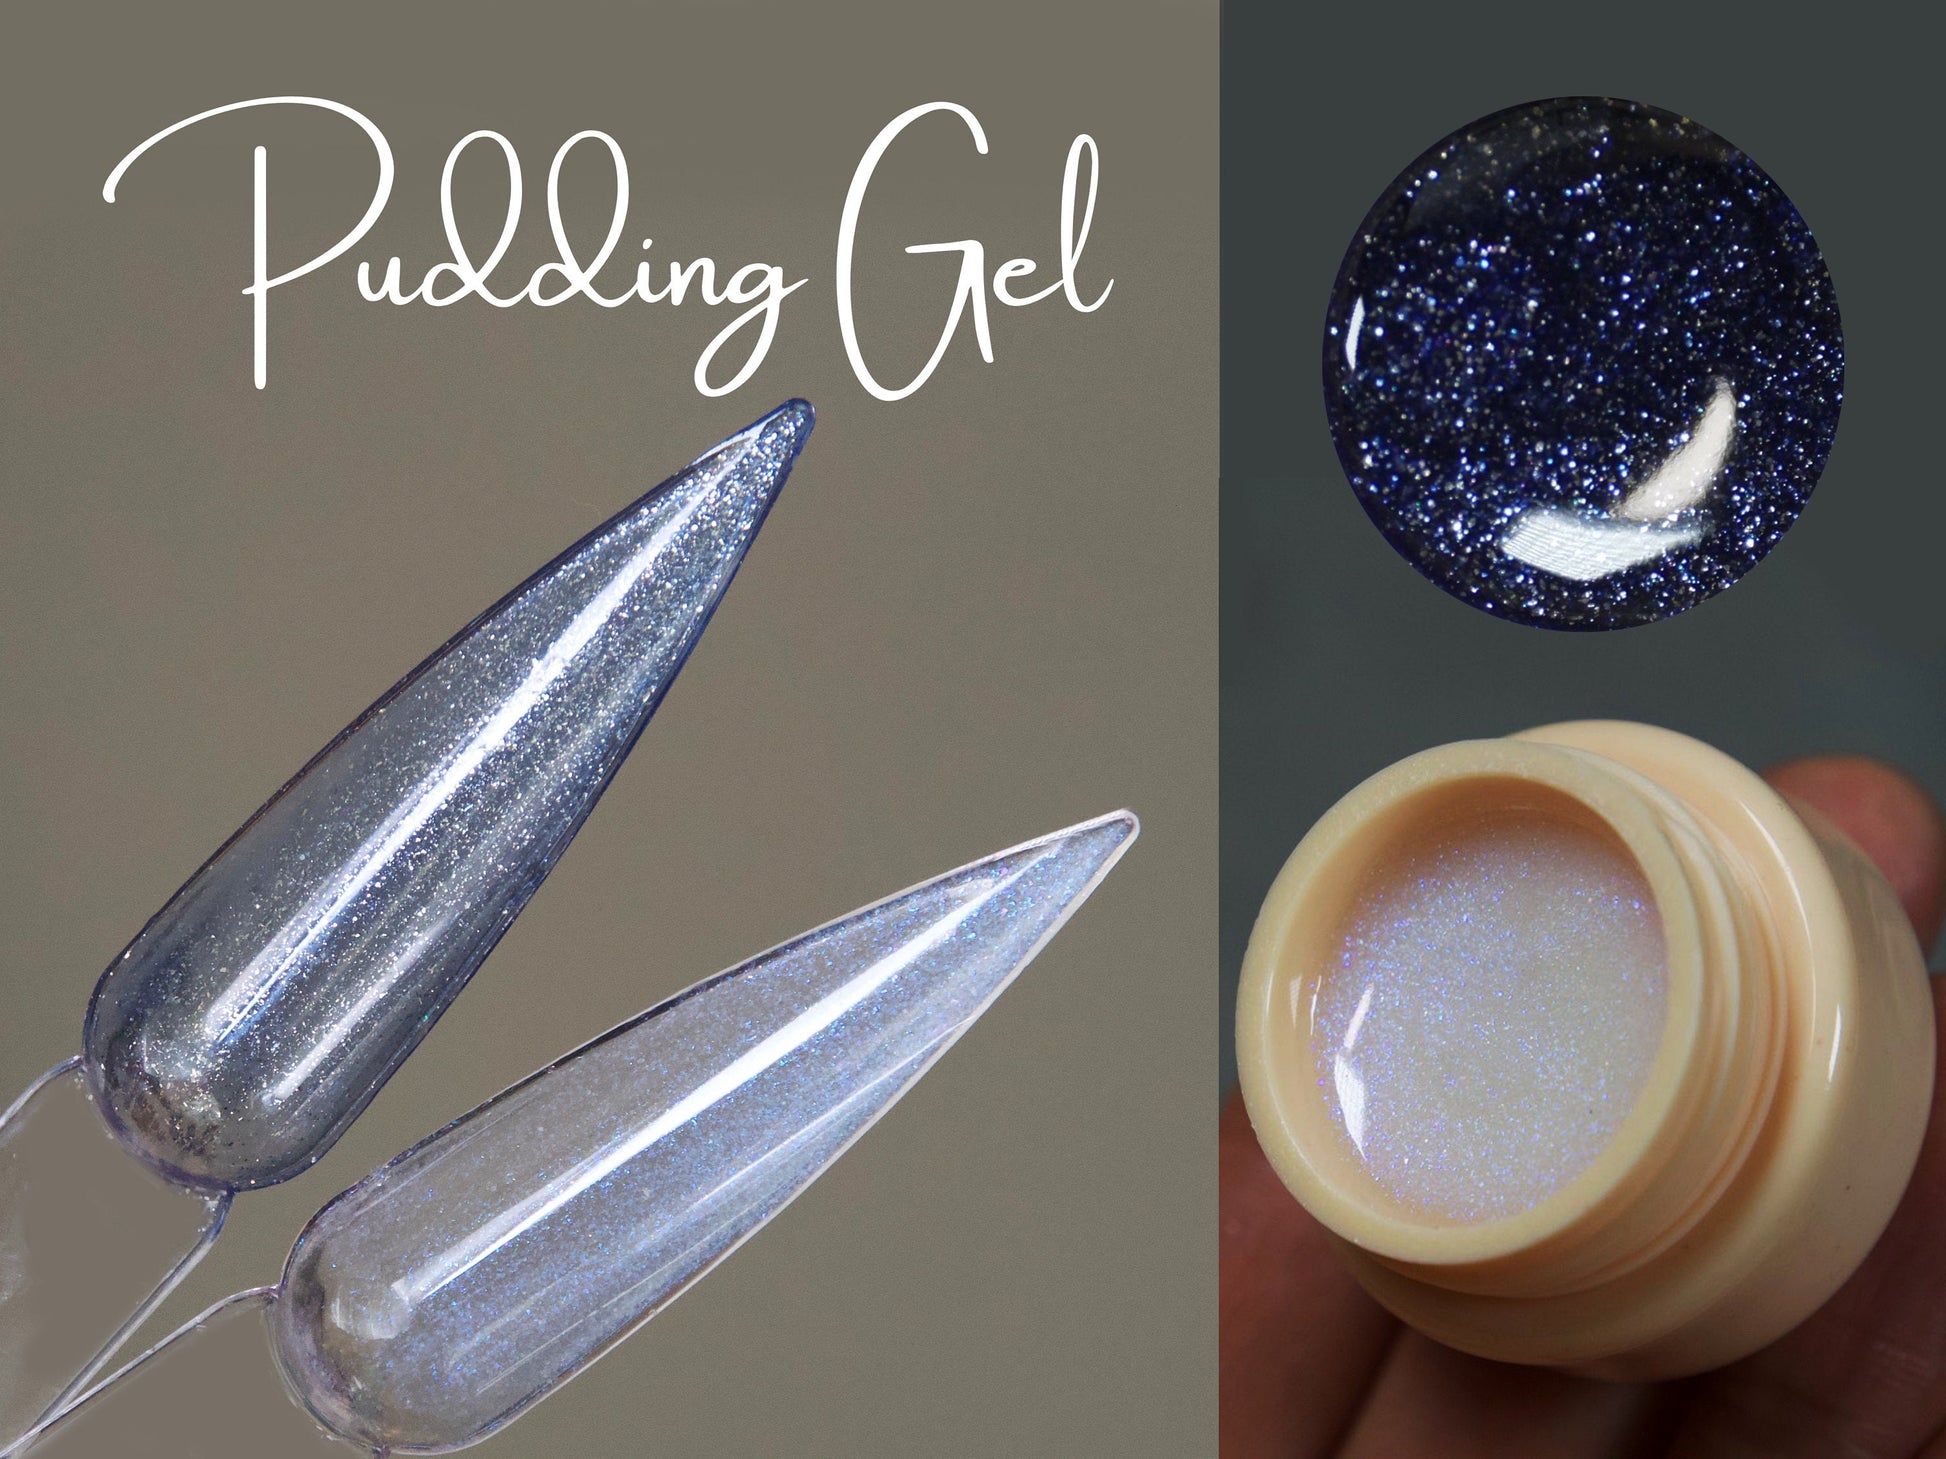 5g Solid Jelly UV Gel Nail Art /Galaxy Blue Glittery Navy Nails Pudding UV Gels Creamy Gel Manicure Nails Polish Starry Universe Nail